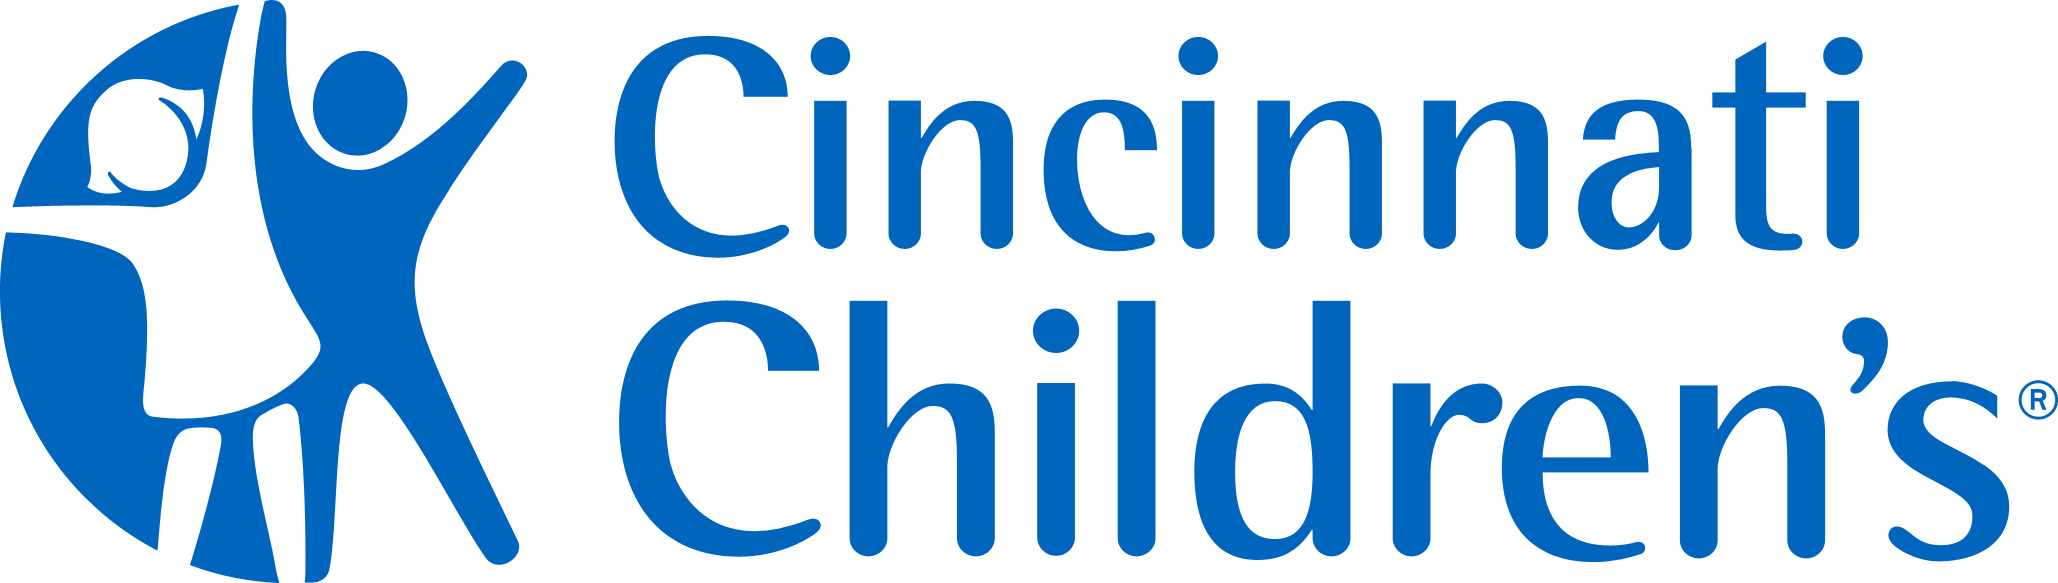 Cchmc logo